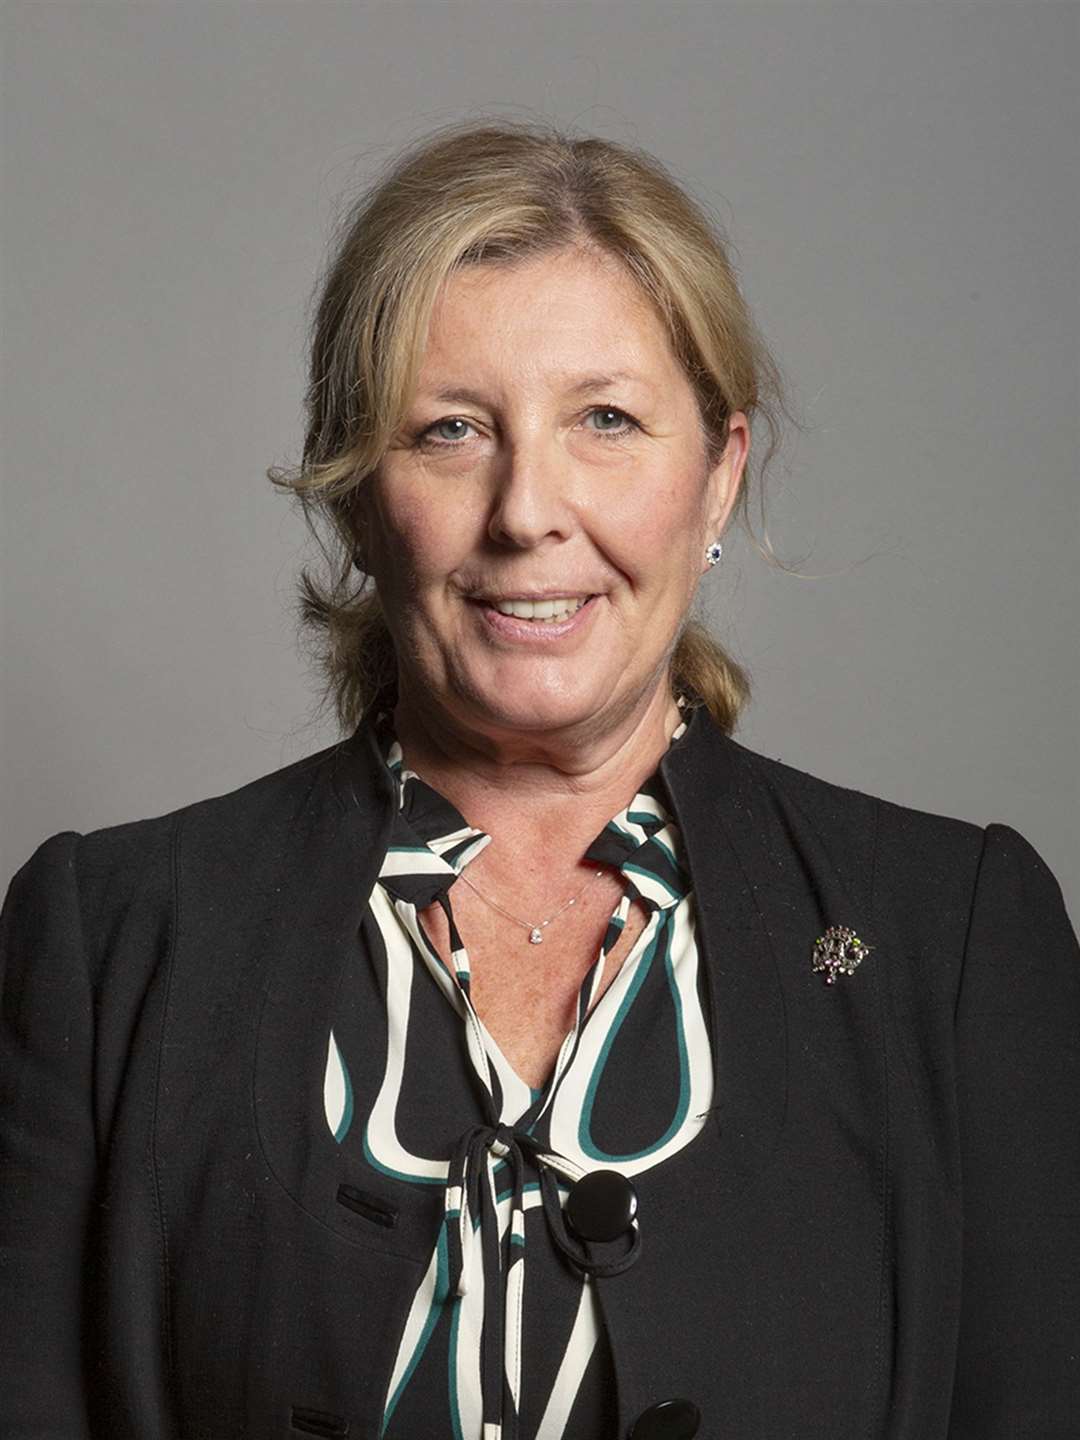 DWP Minister Julie Marson. Picture: Wikipedia